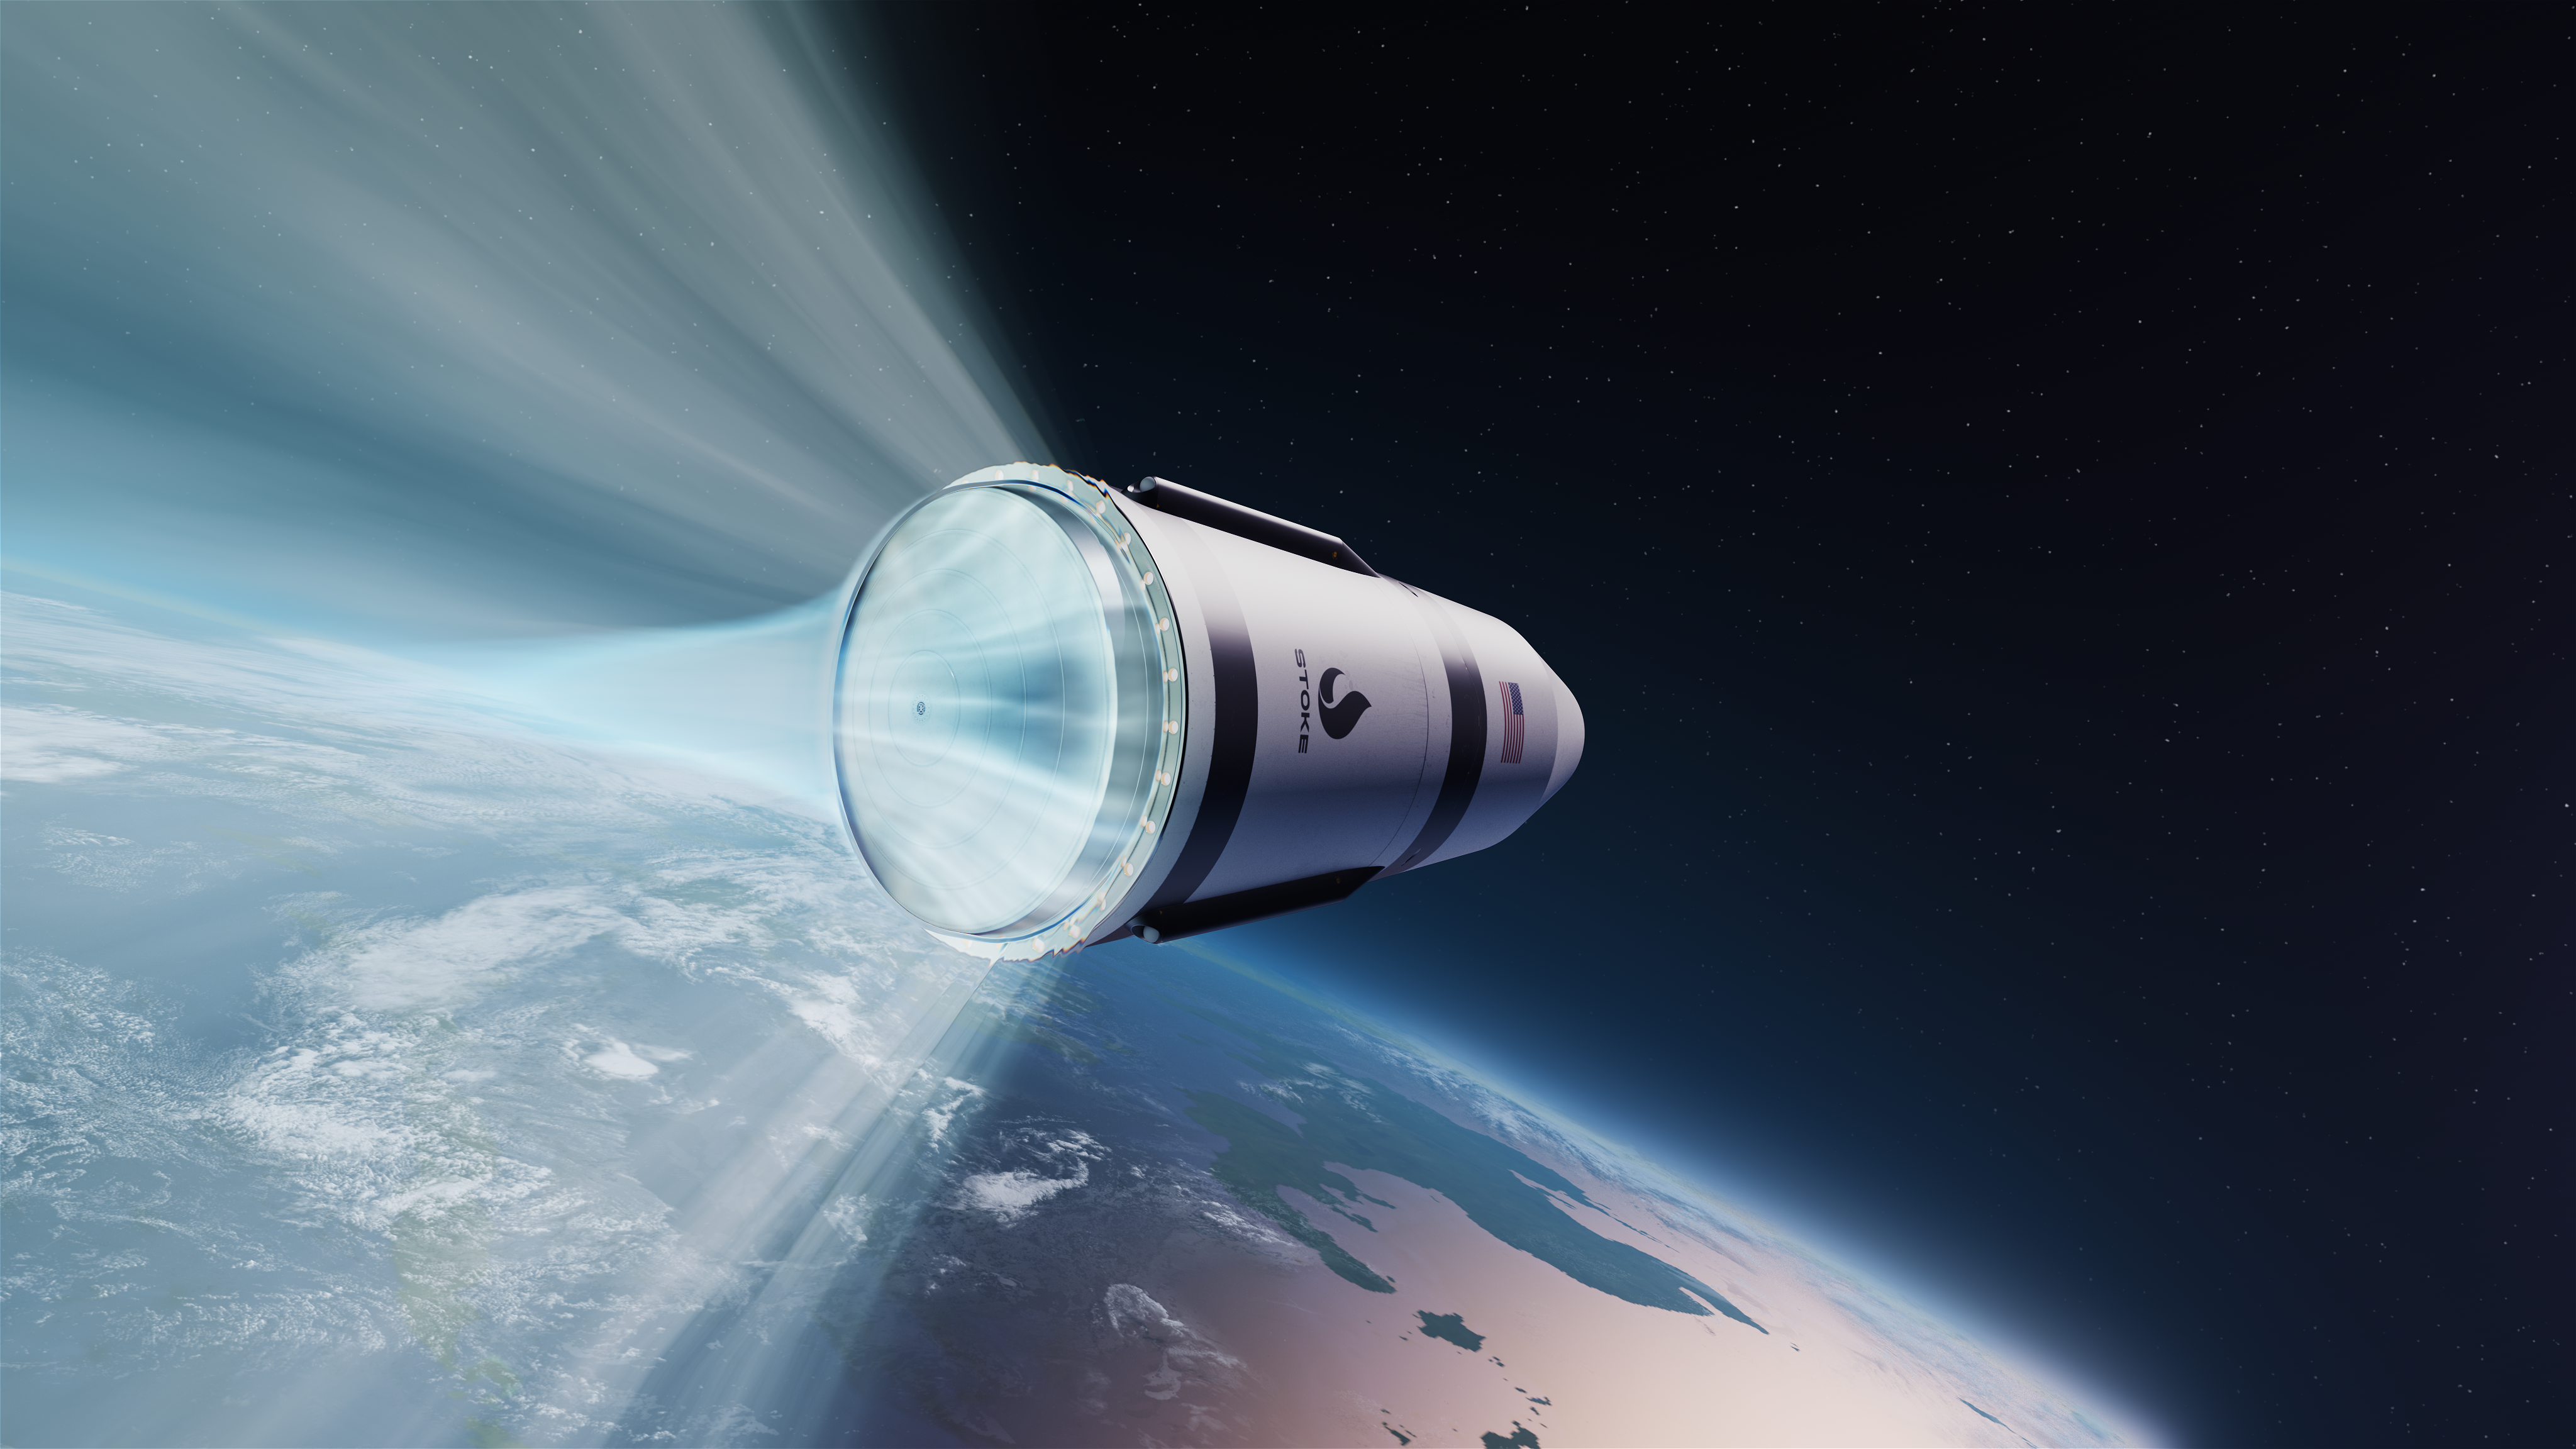 Stoke Space raises $100 million for reusable rocket development - SpaceNews